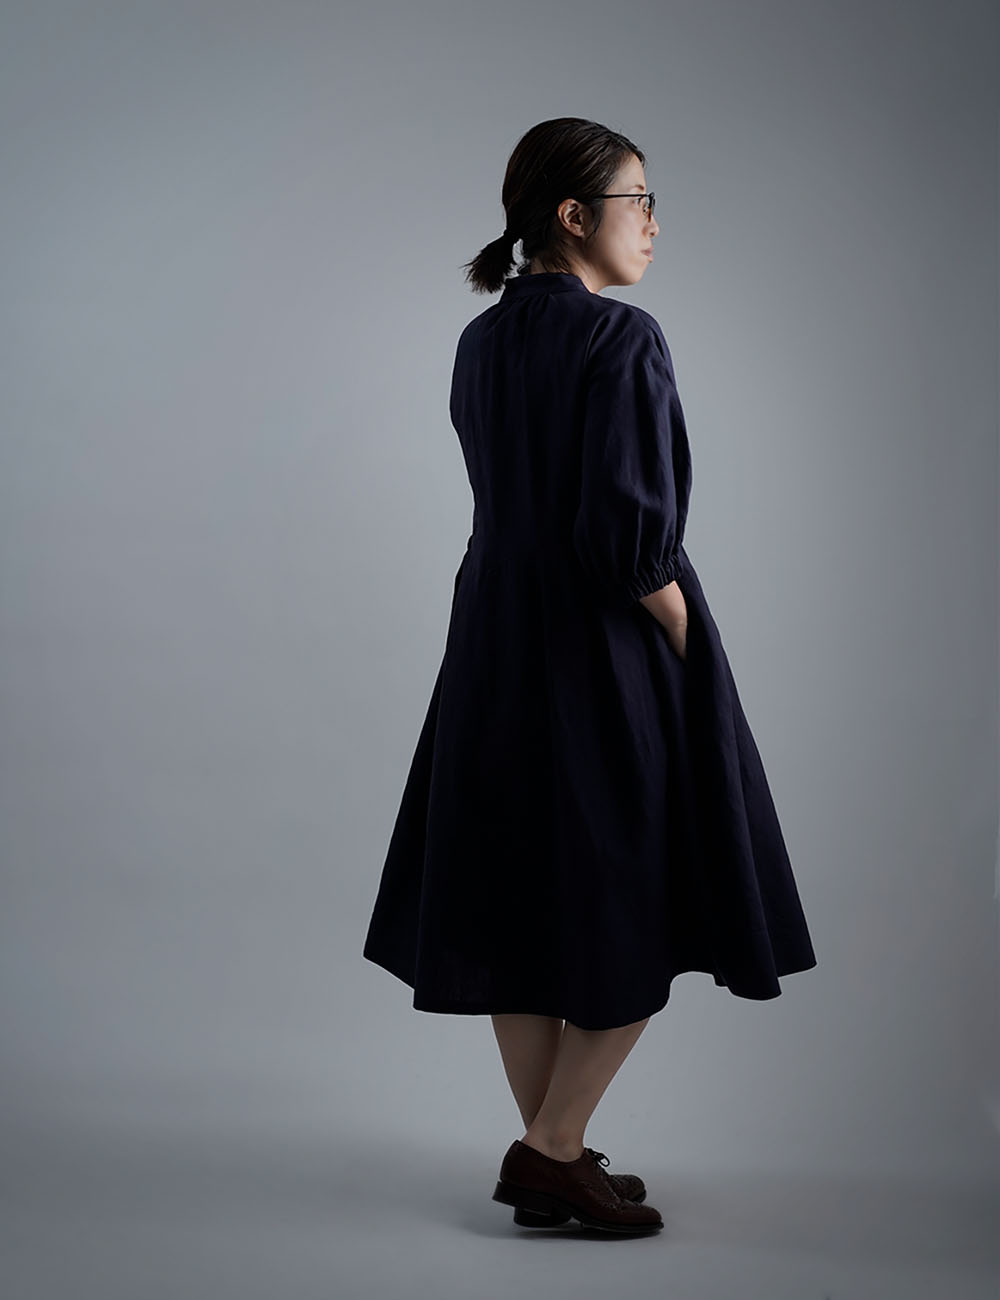 【wafu】Linen Dress　スタンドカラーワンピース　超高密度リネン /黒紅色 a073i-kbi1